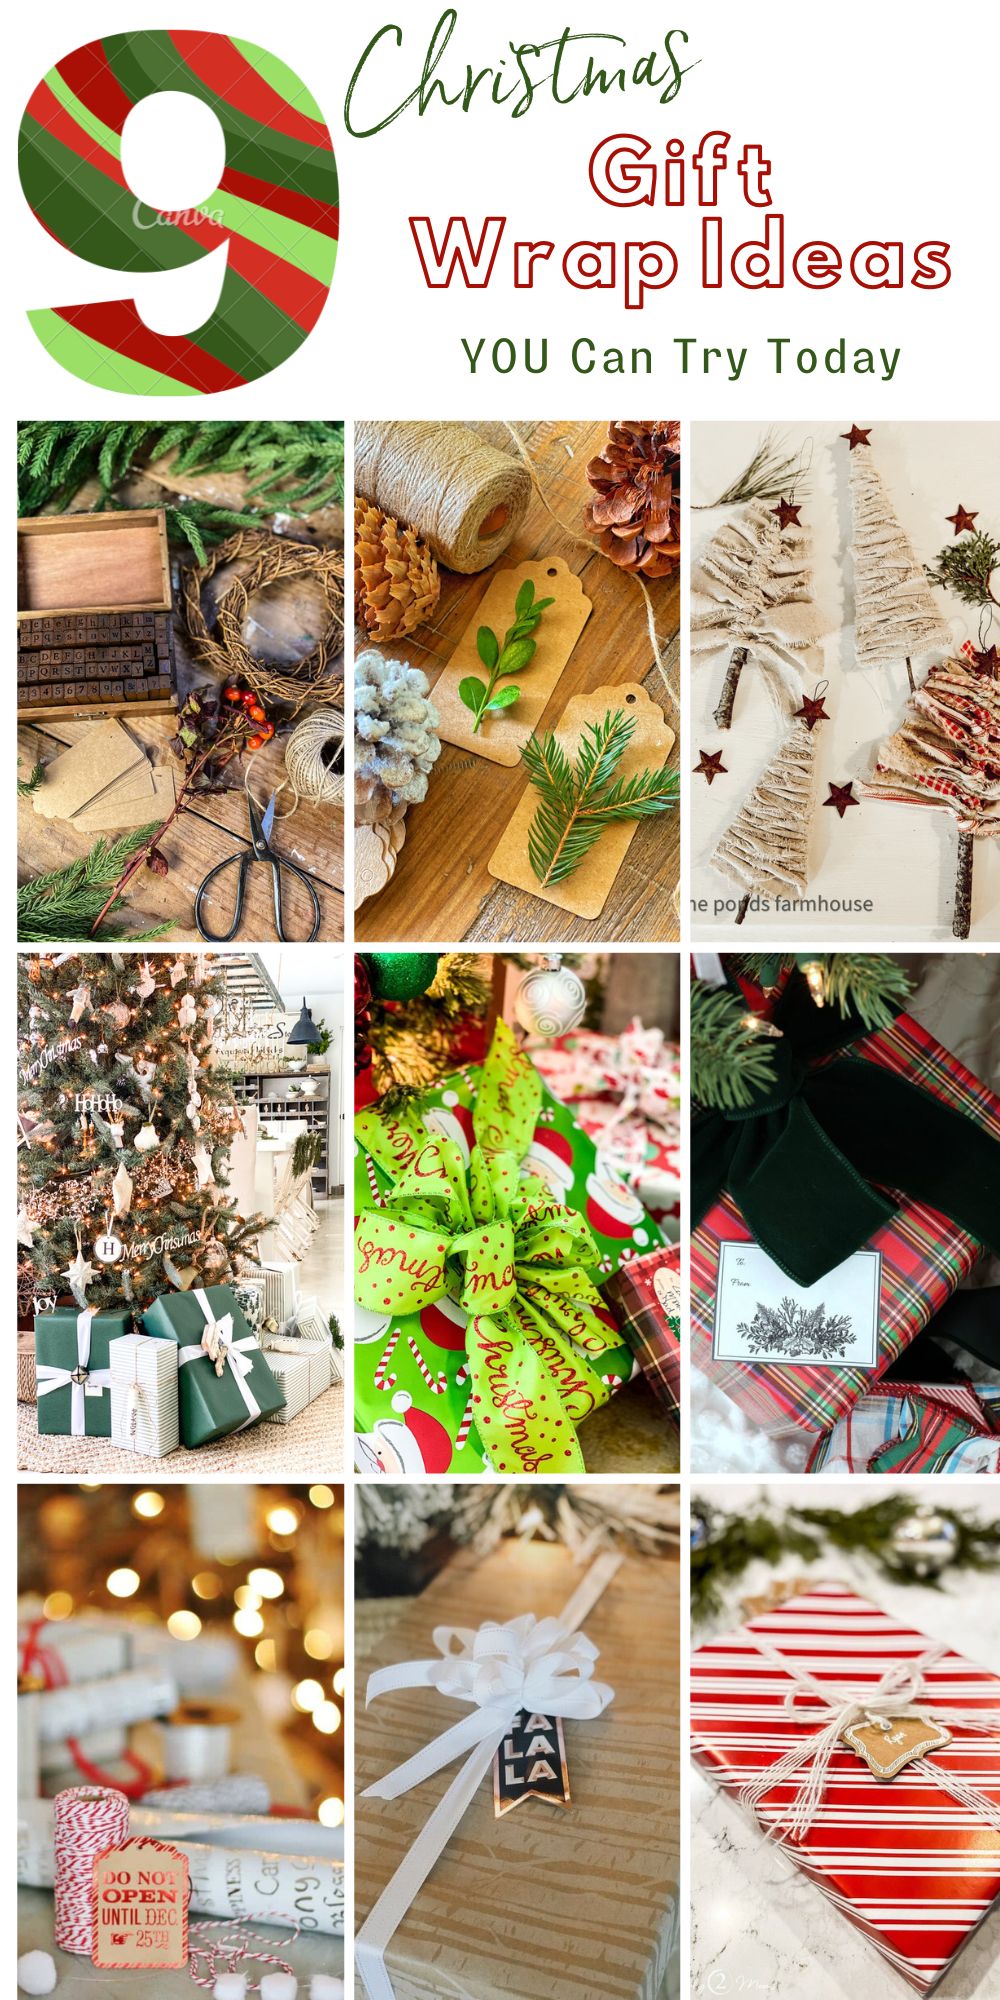 https://shegaveitago.com/wp-content/uploads/2022/11/Copy-of-9-Christmas-Gift-Wrap-Ideas-Pin-striped.jpeg